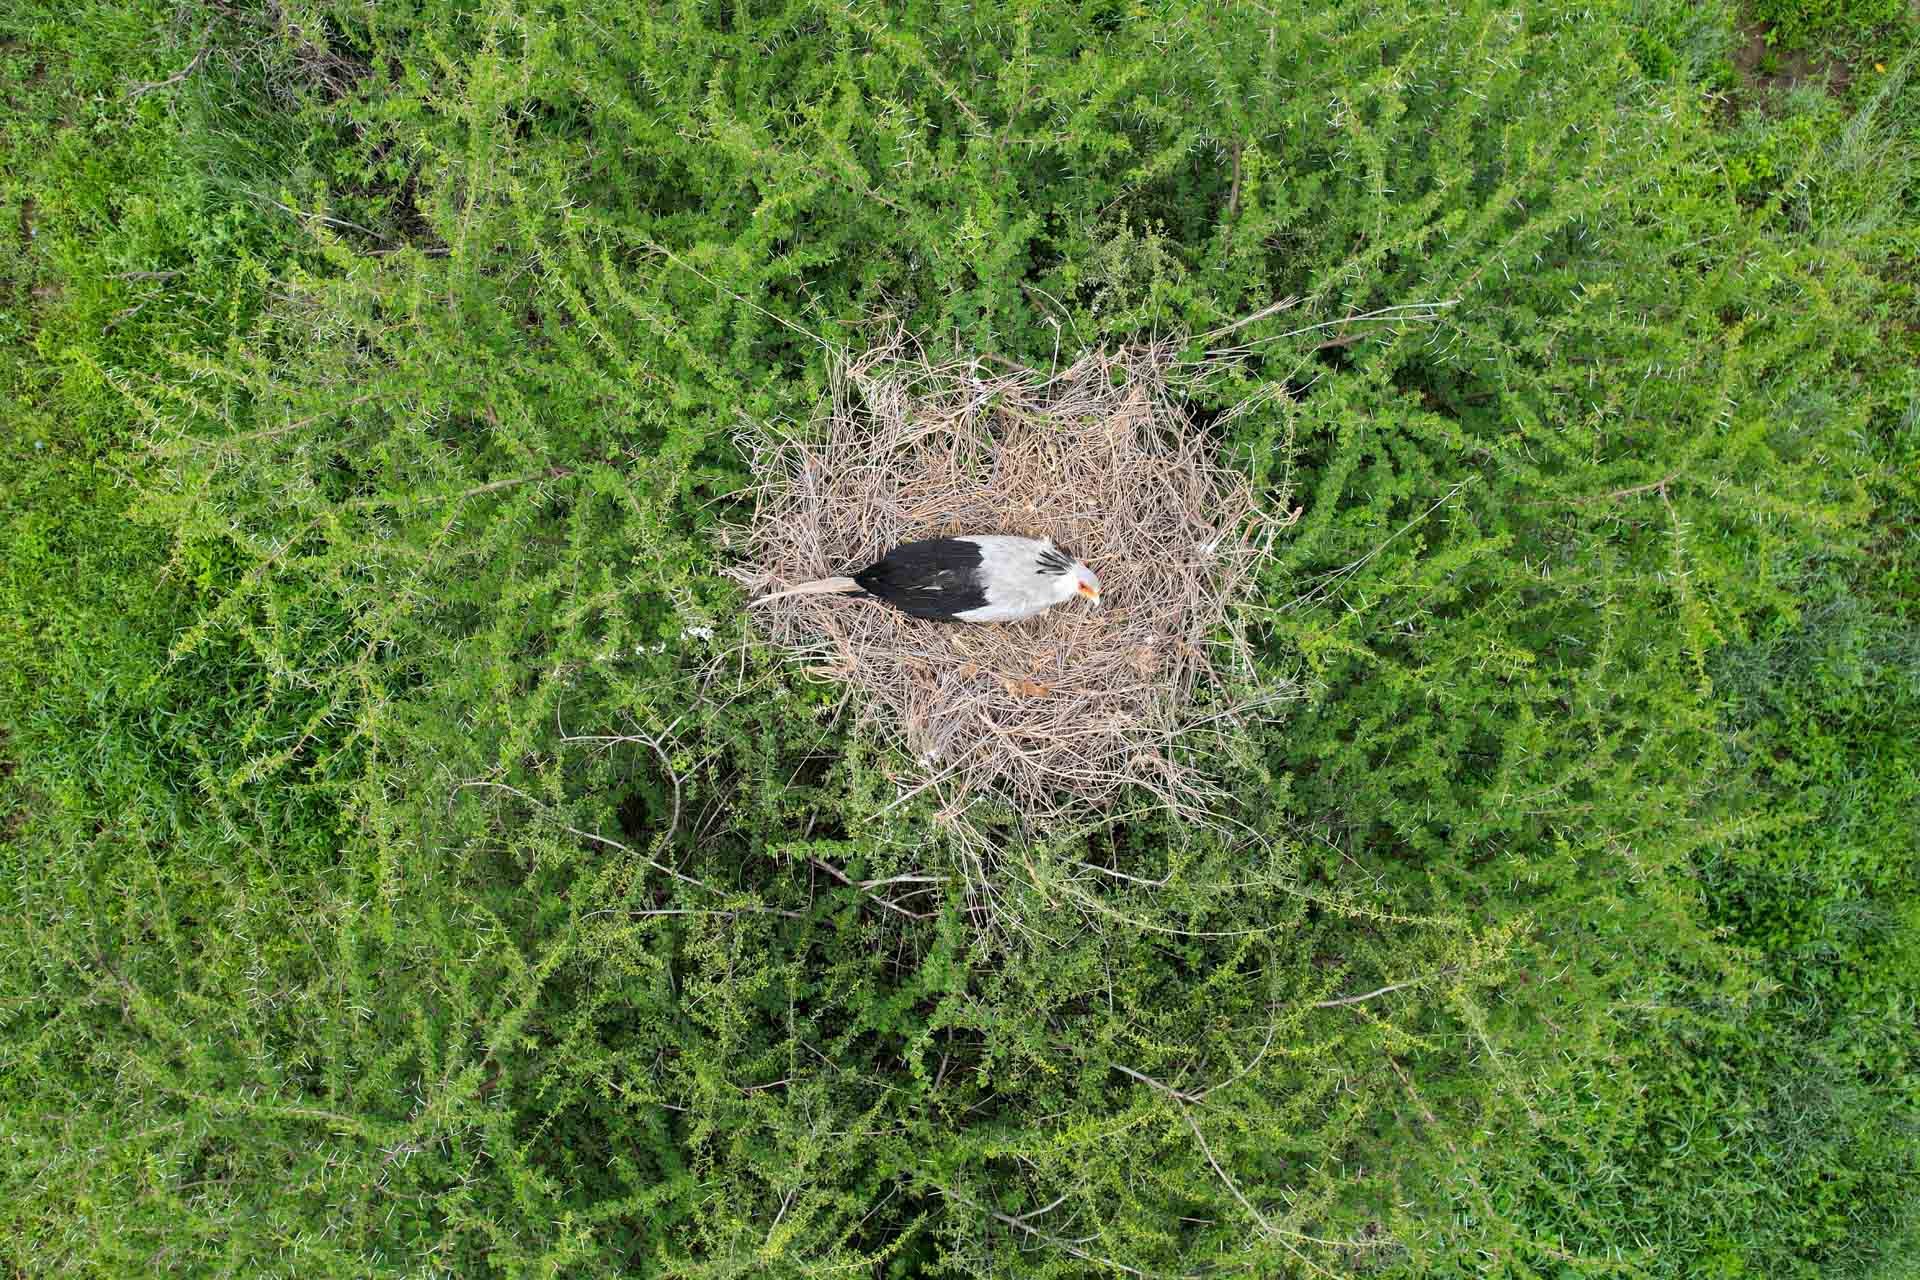 Above: A secretary bird sits diligently on its nest